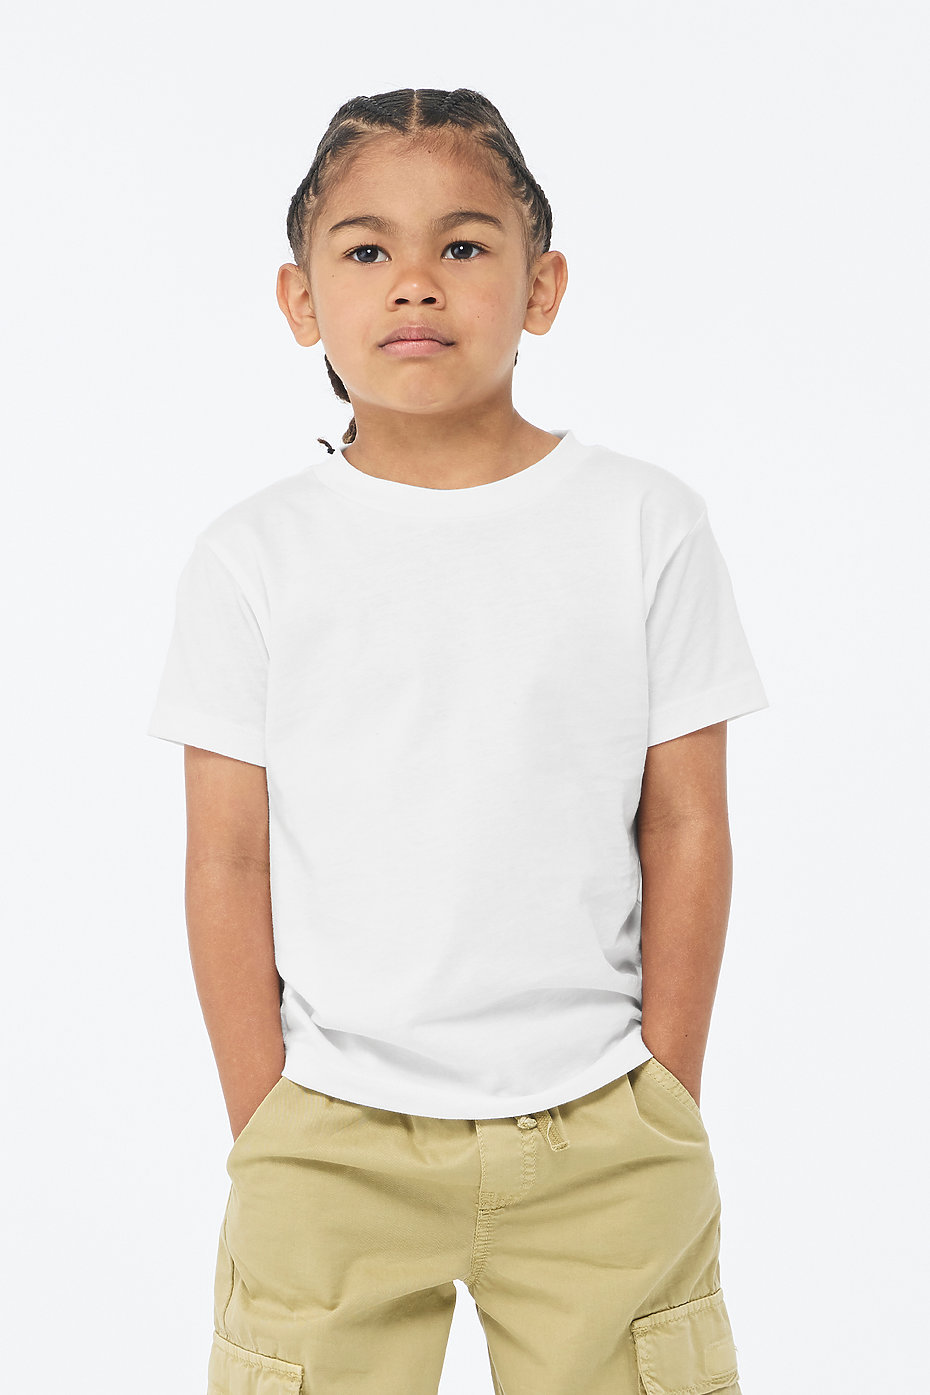 Wholesale Kids Clothing, Plain Blank Kids T Shirts, Kids Tee Shirts